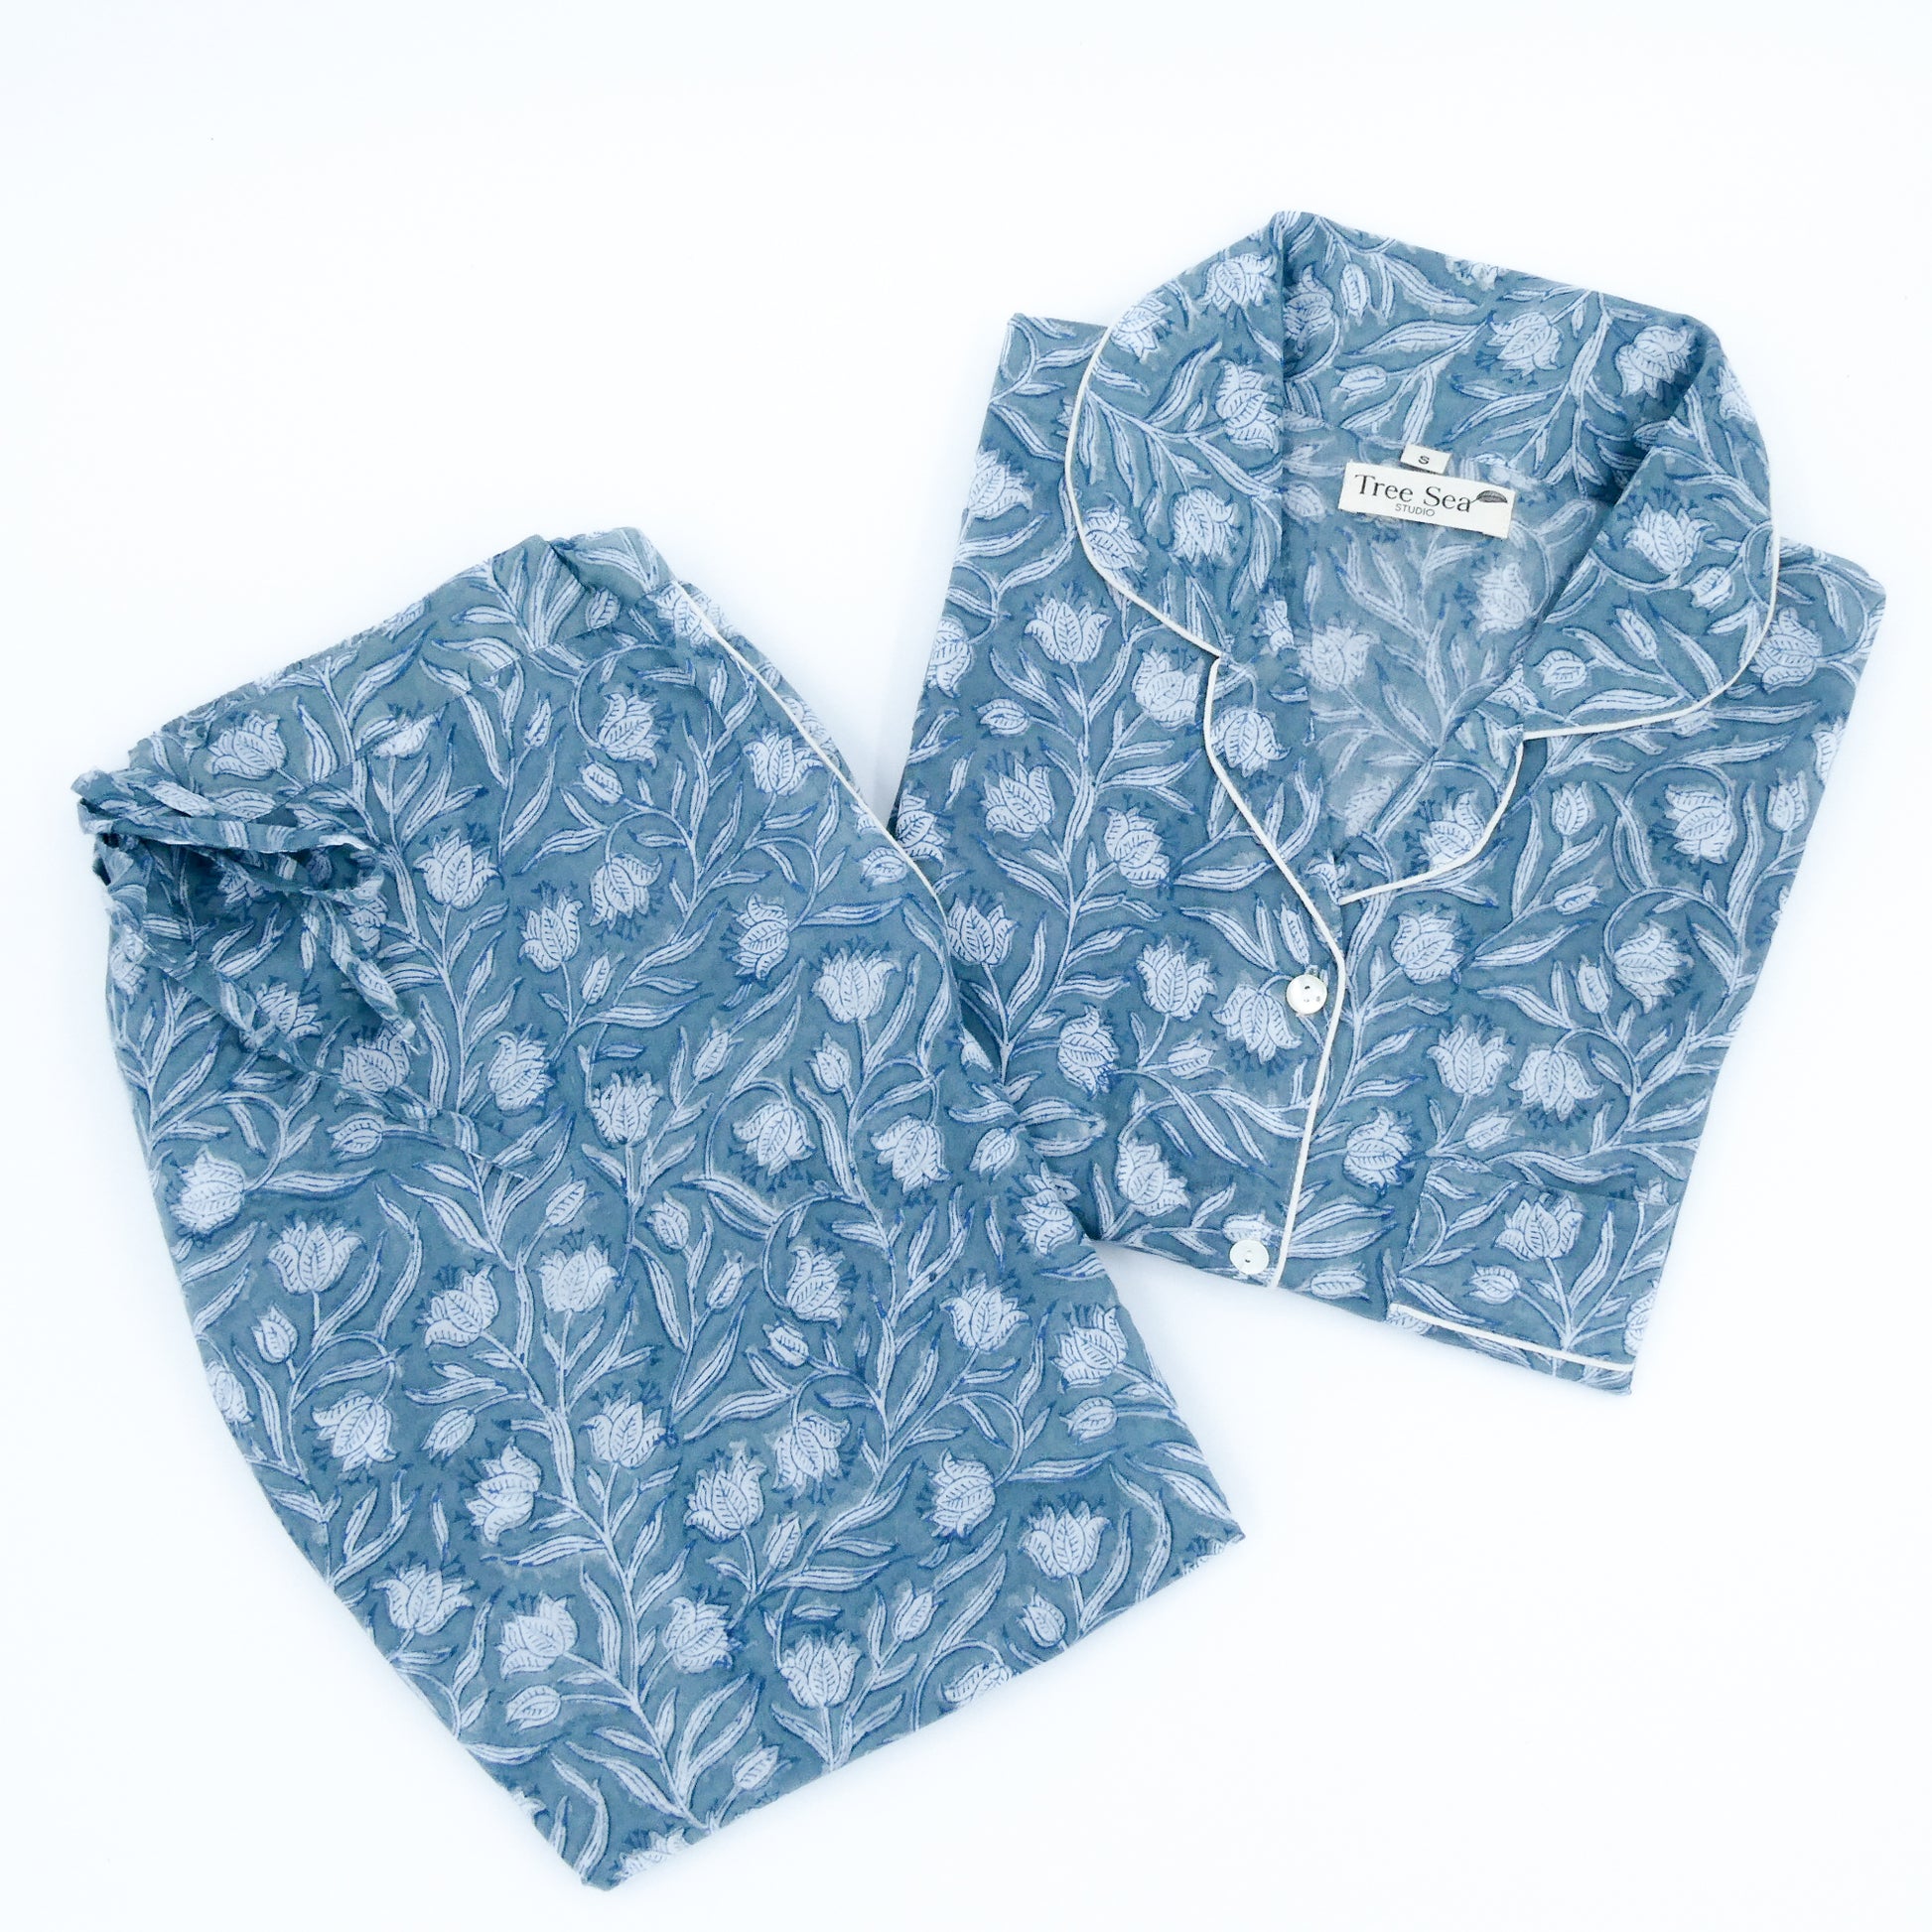 pyjama set for women cotton with blue-white-floral-design